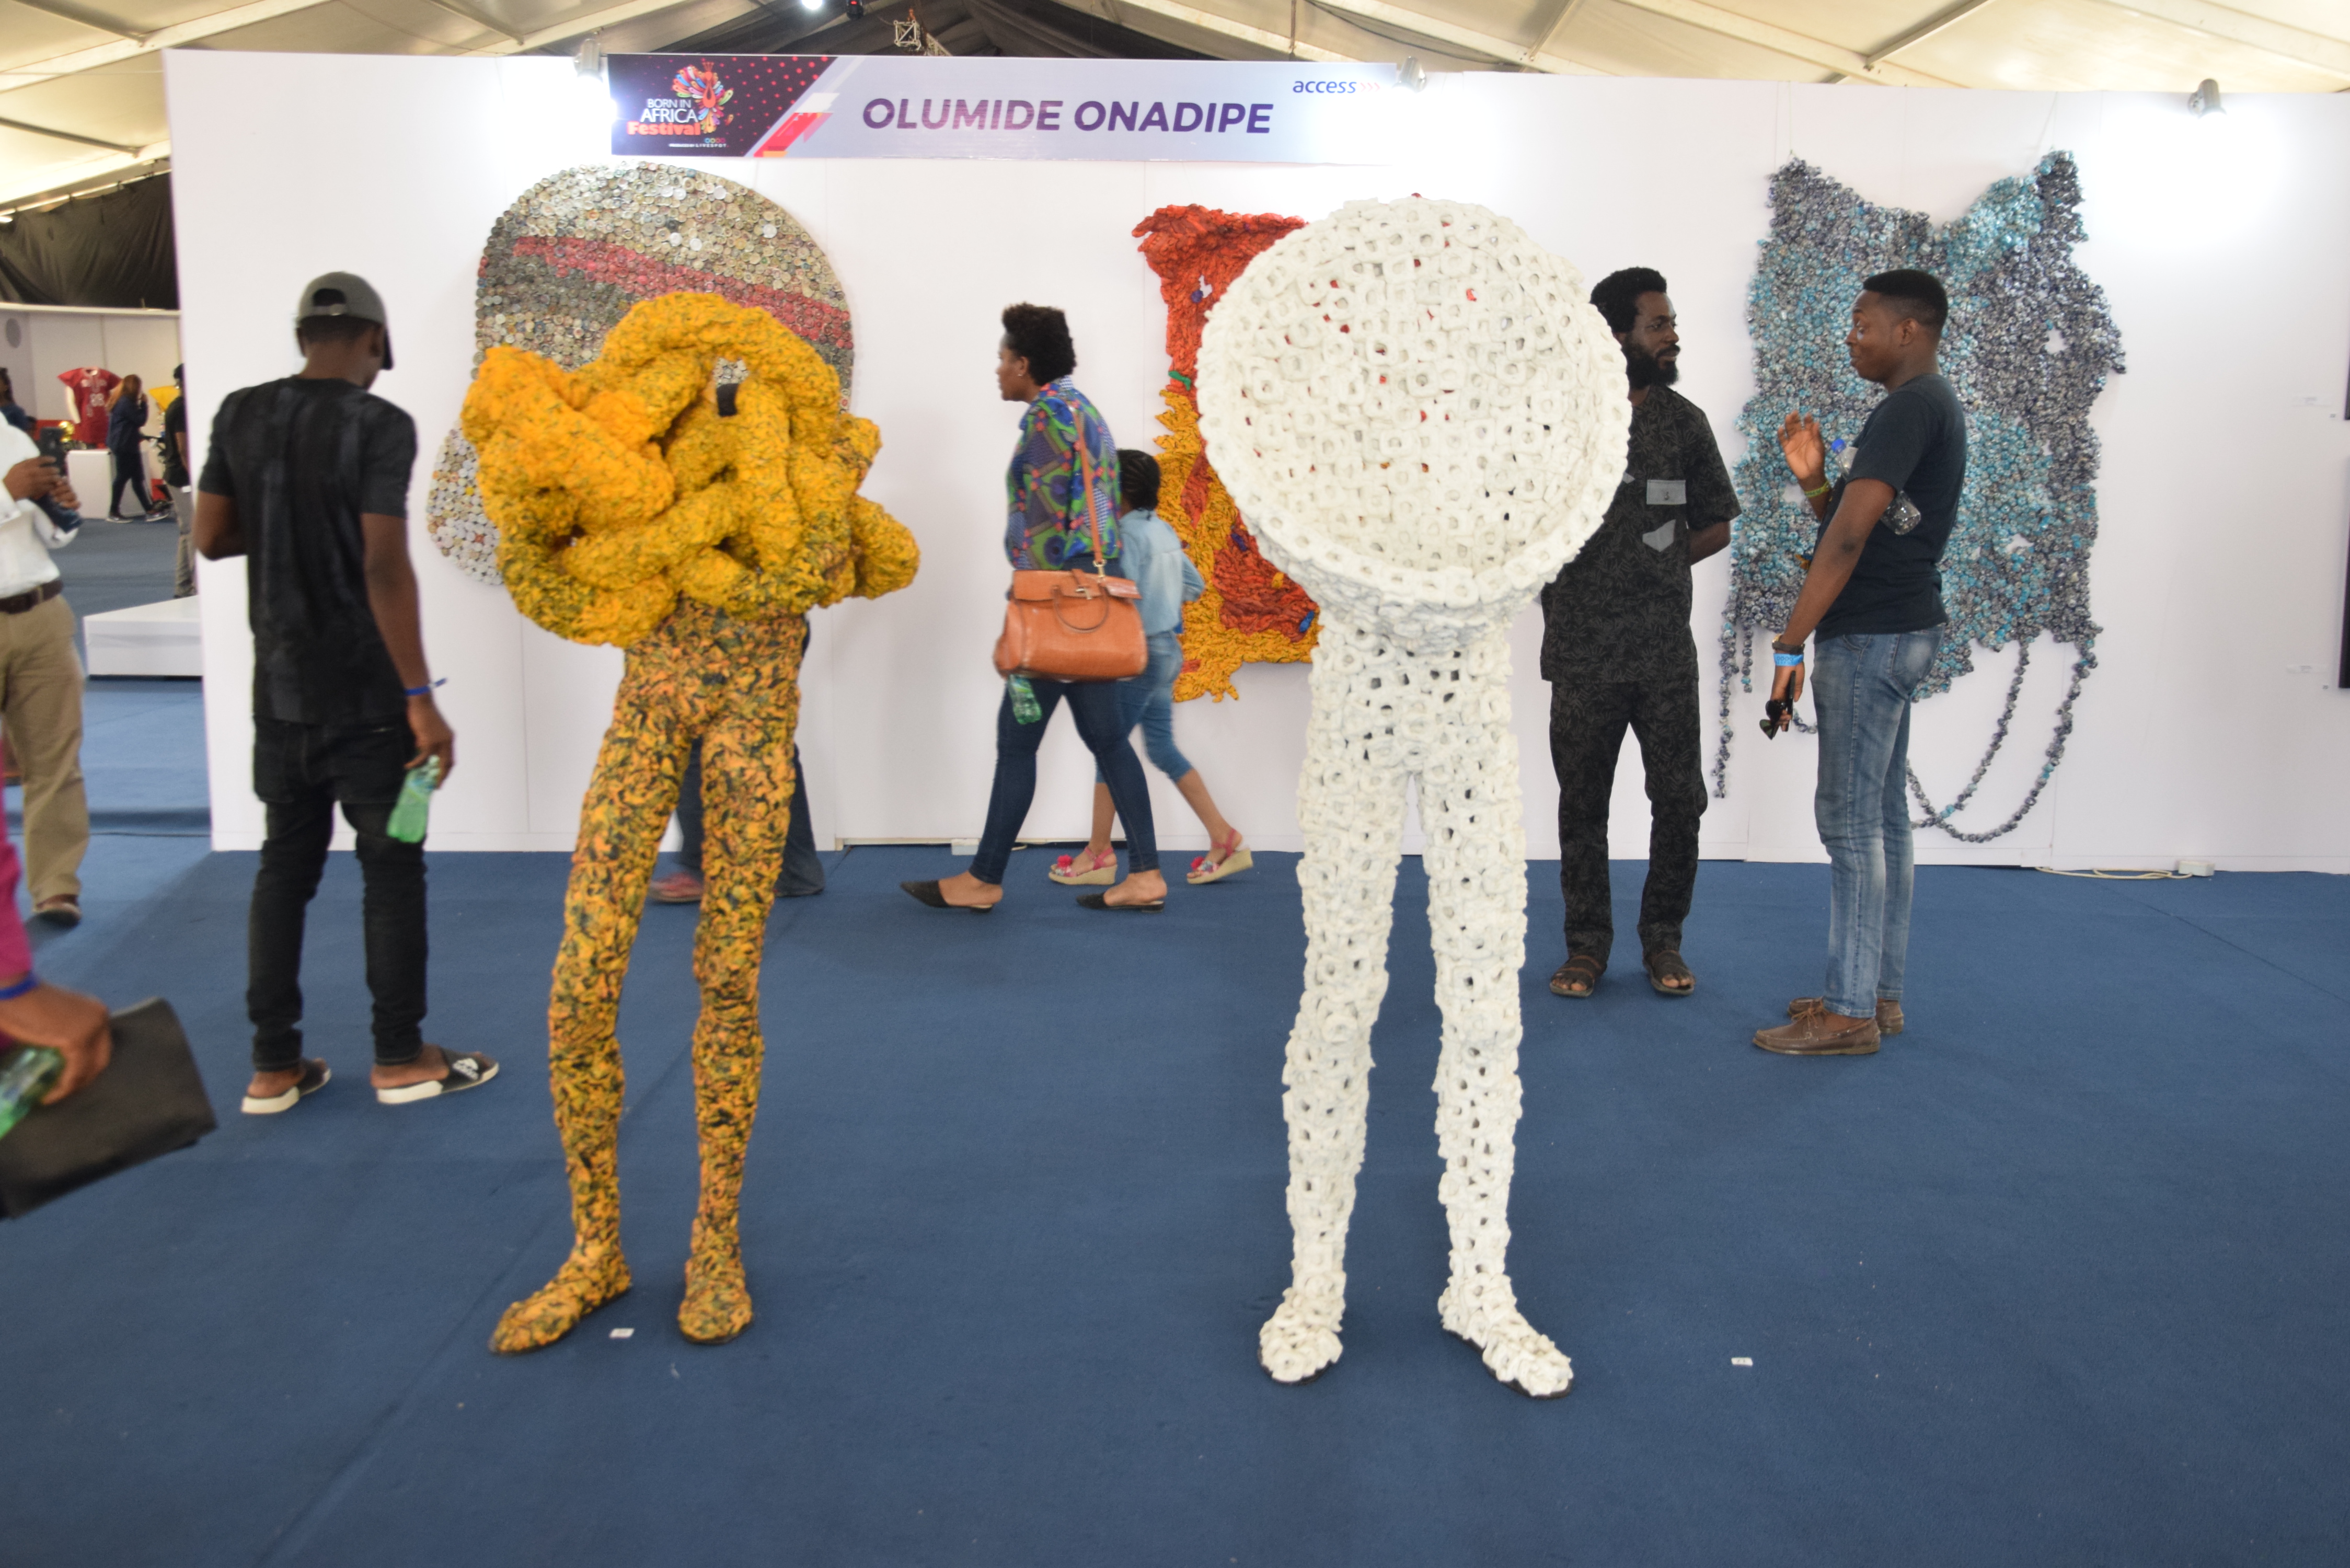 Olumide Onadipe’s art collection at BAFEST Art Park